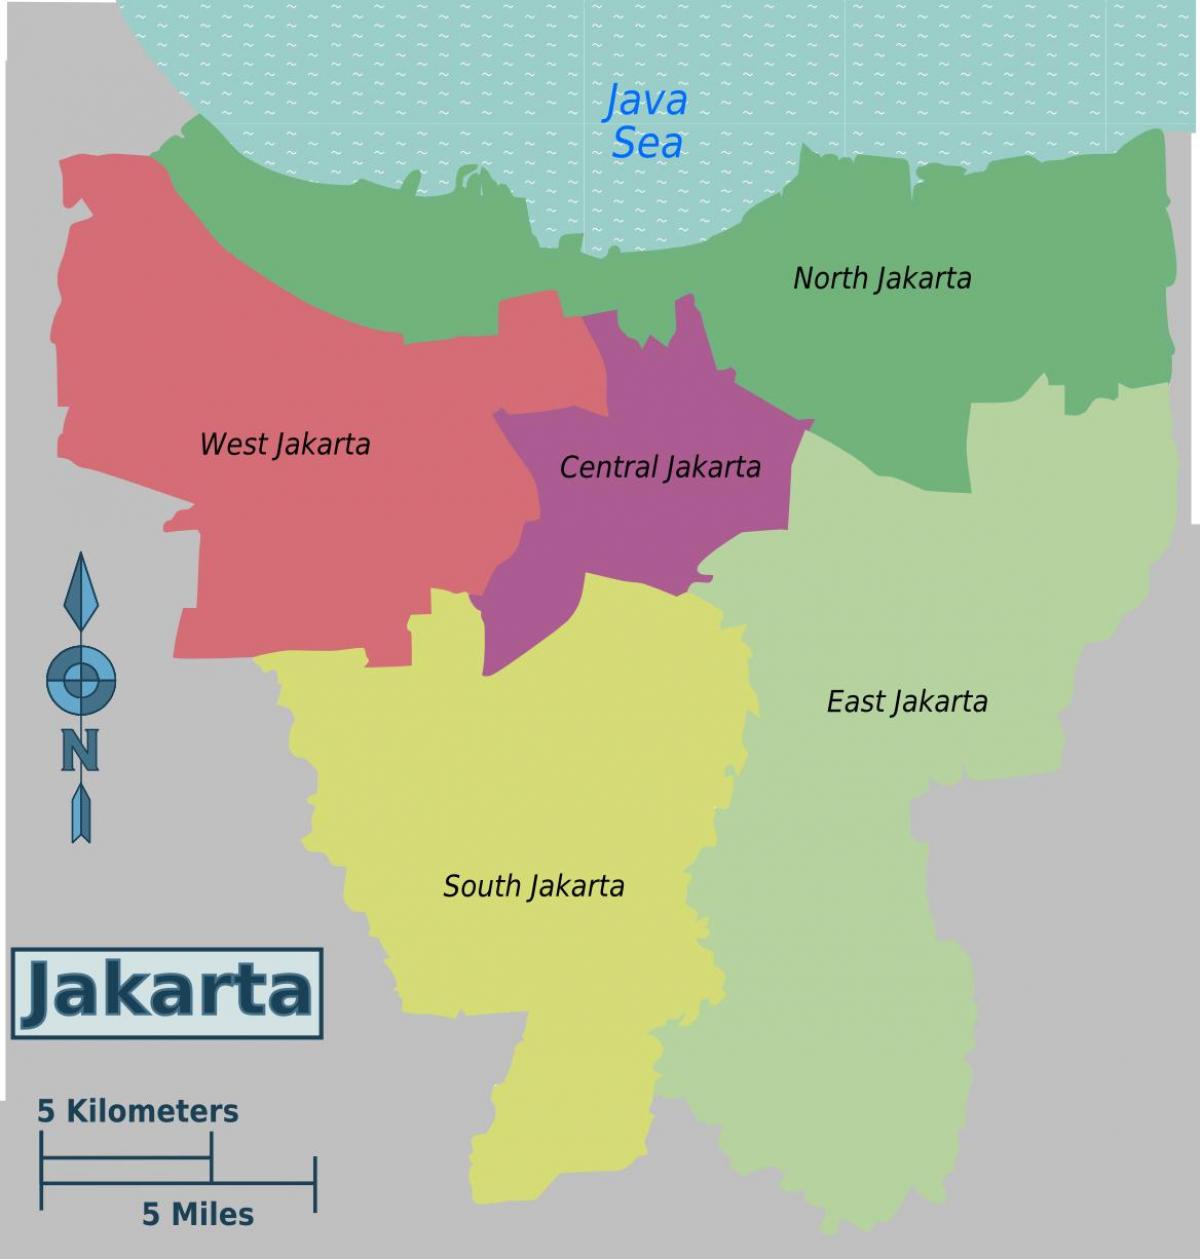 kaart Jakarta linnaosades